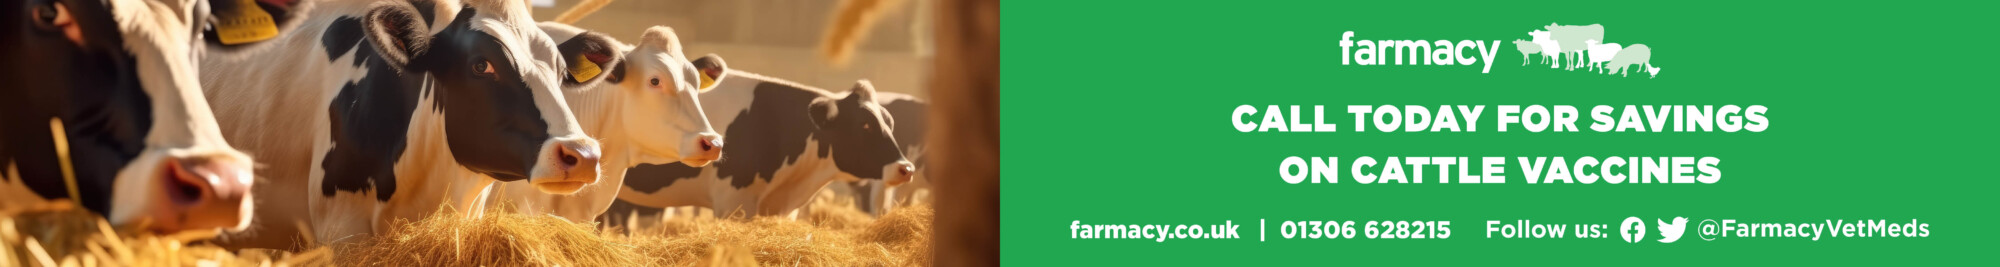 Farmacy advert on farming news site